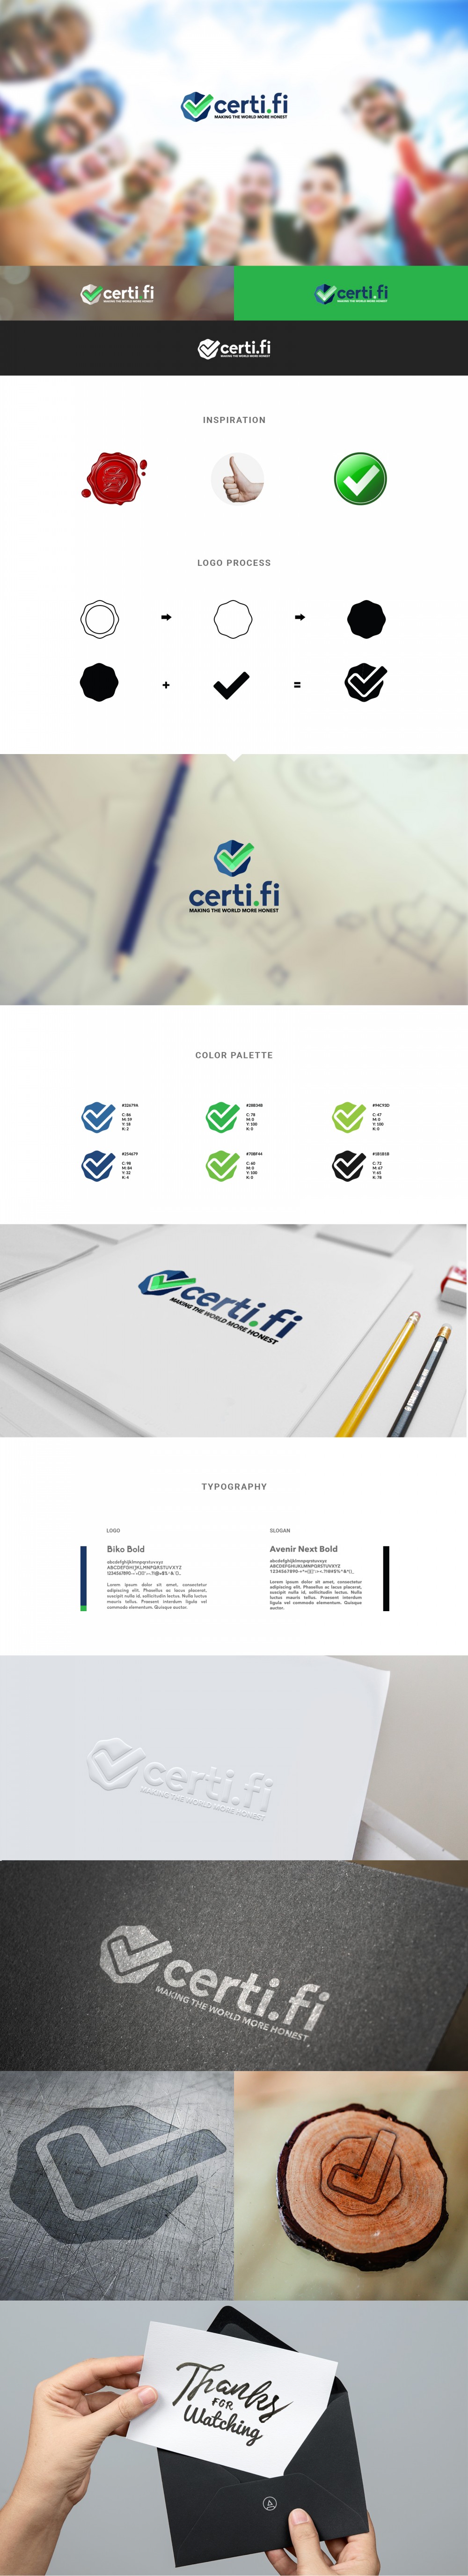 Branding, UX/UI Design for Certi.fi